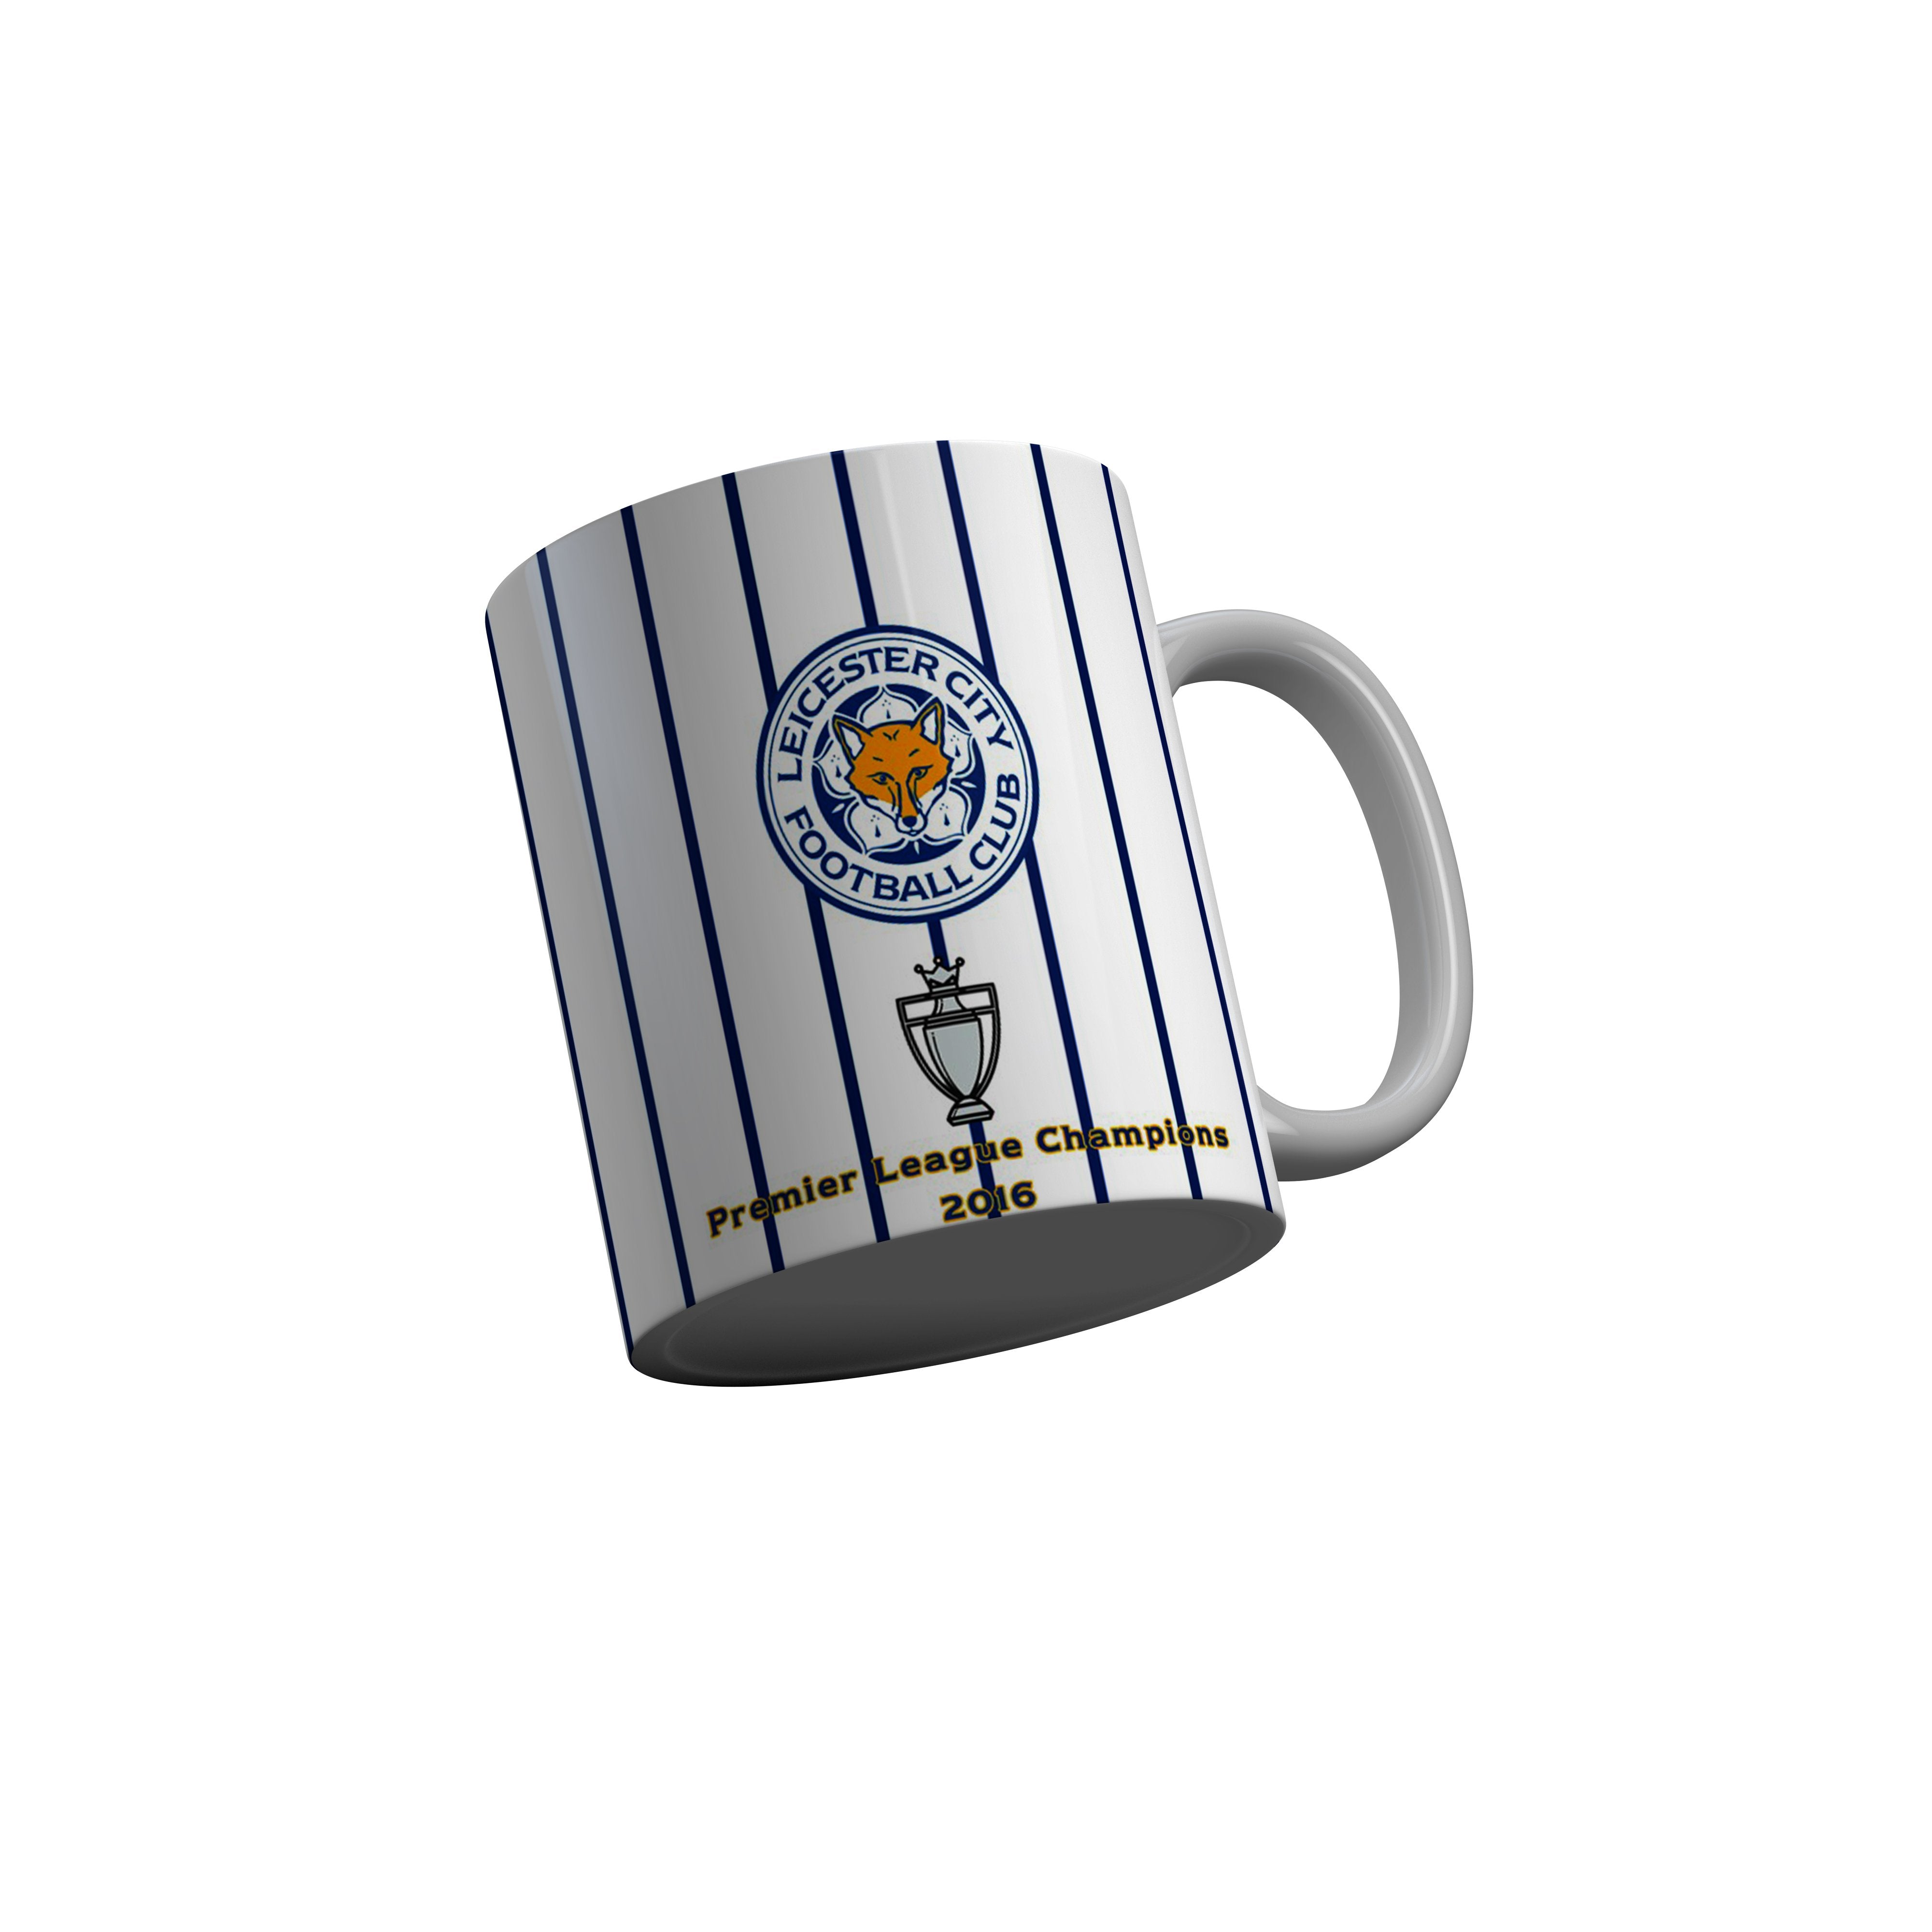 FashionRazor Leicester City Football Club Premier League Champions 2016 Ceramic Coffee Mug